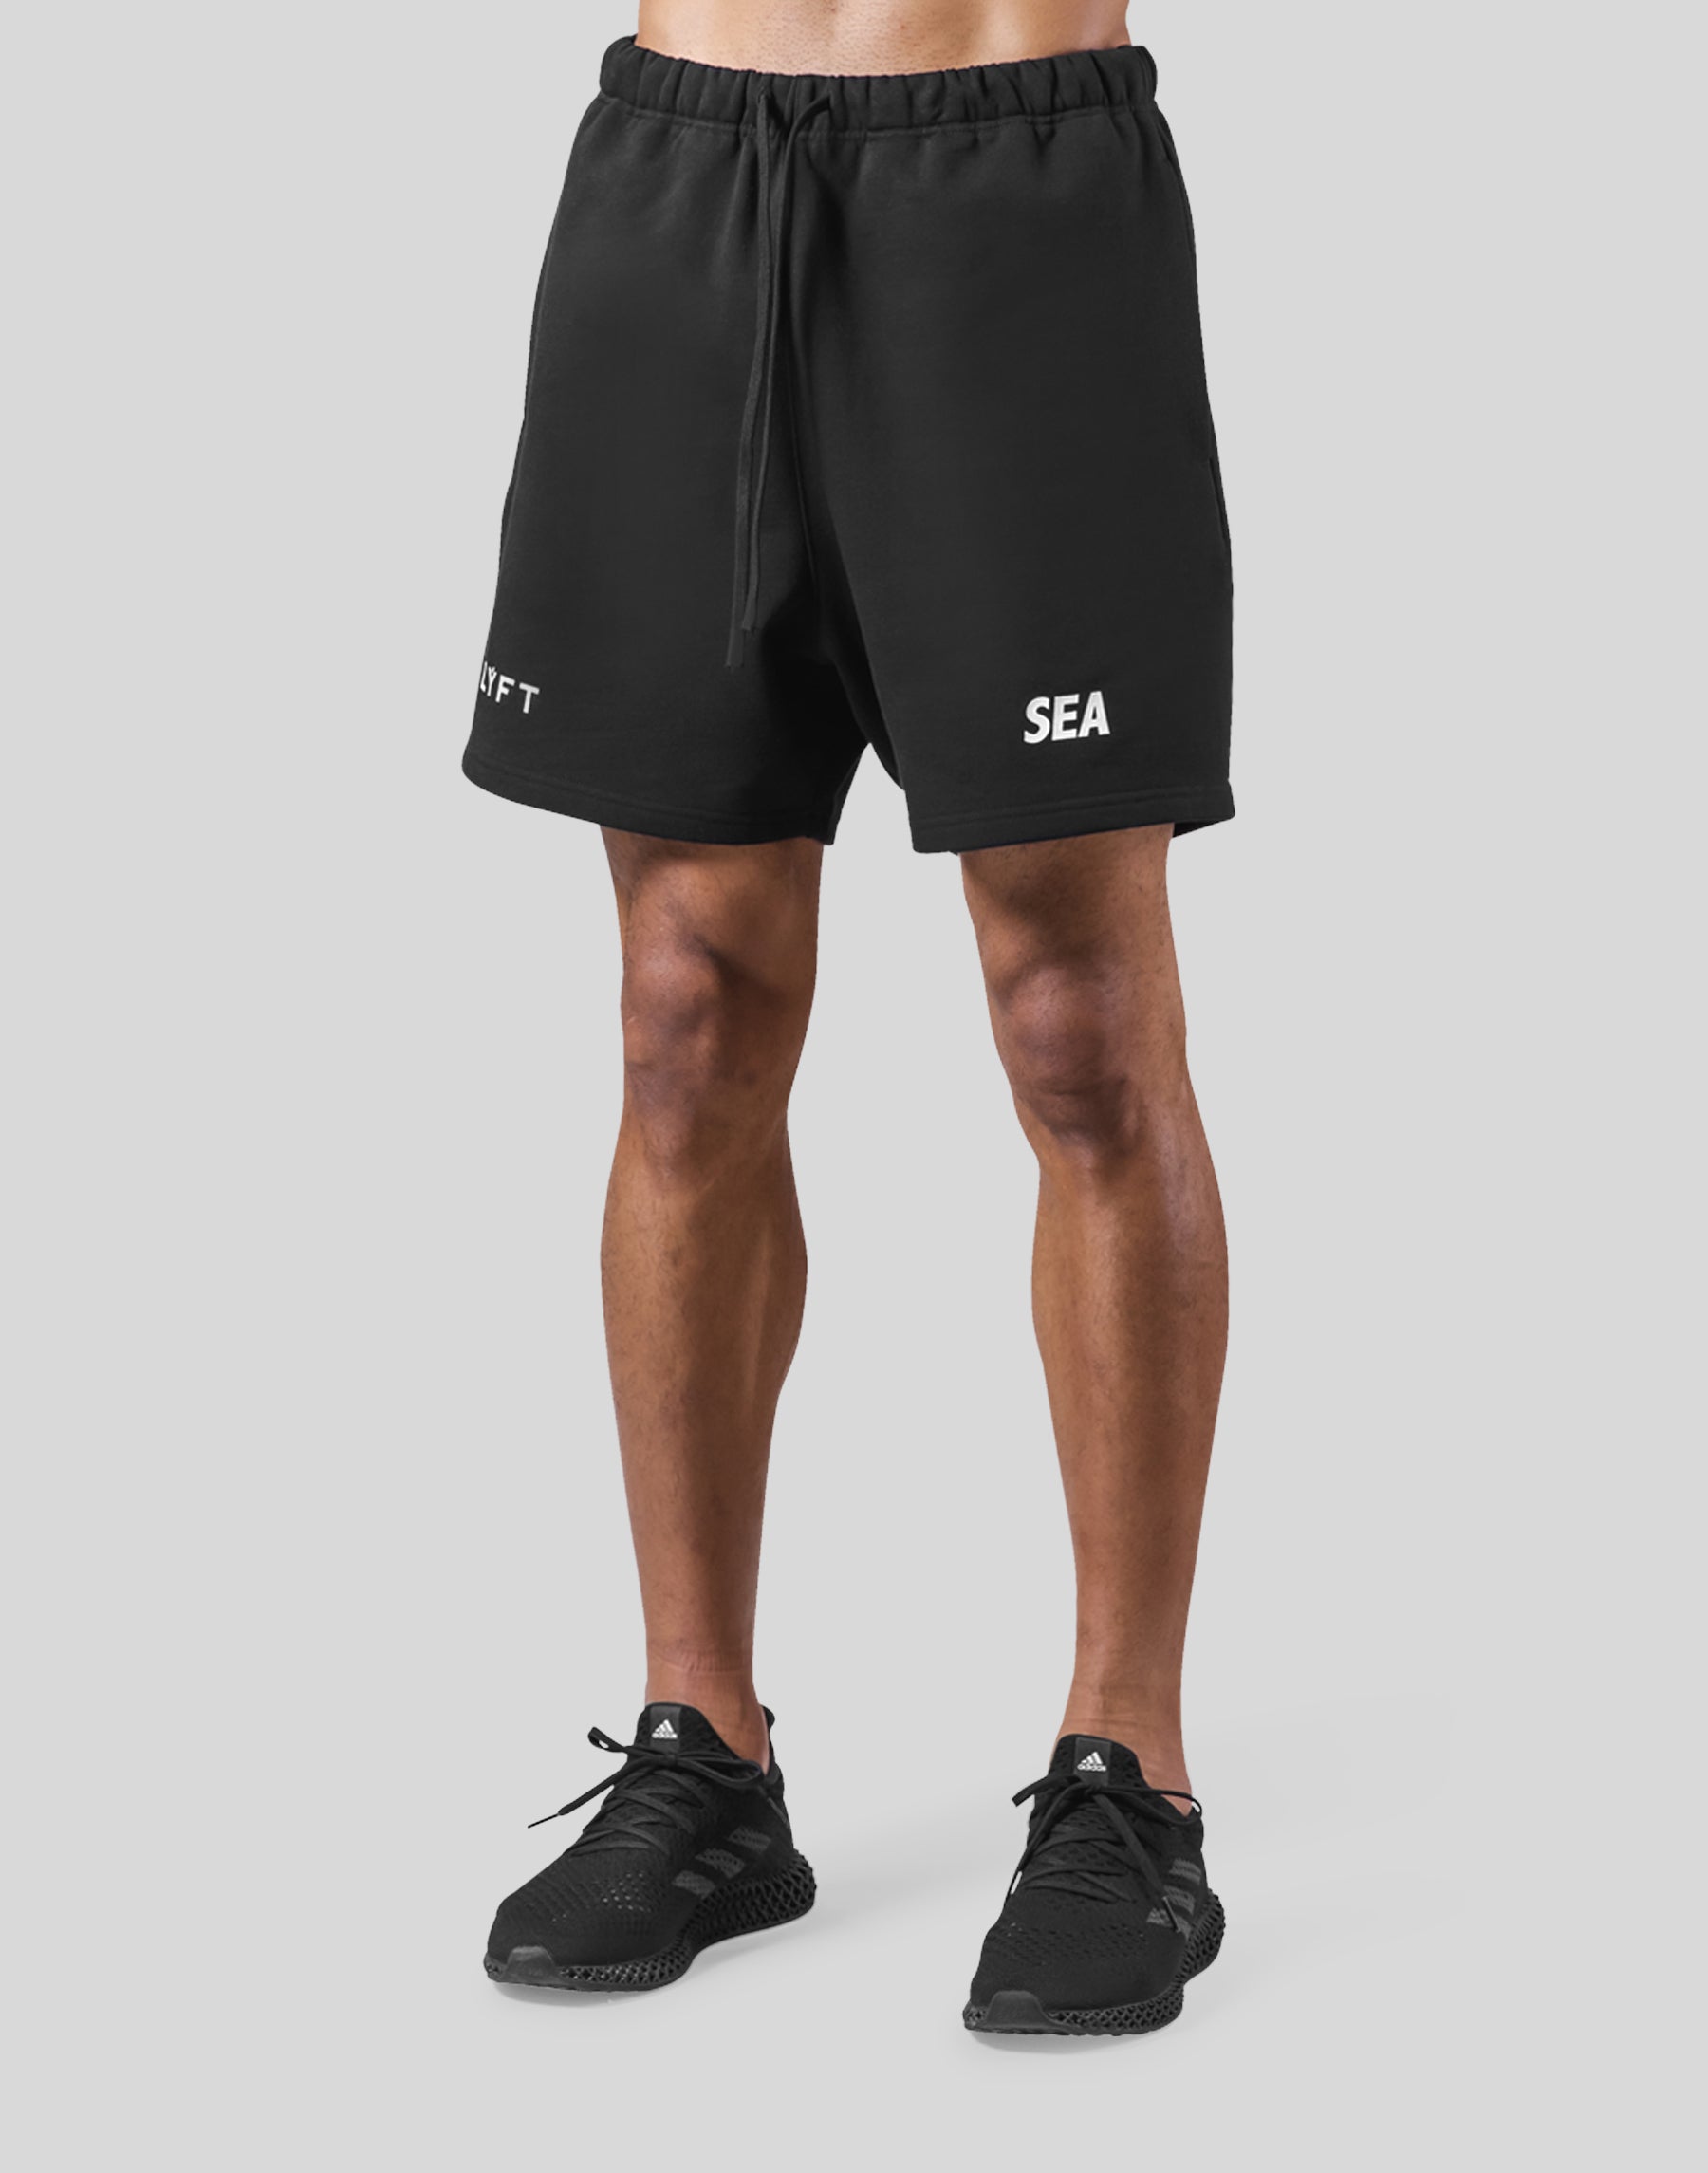 【受注商品】LÝFT × WIND AND SEA Sweat Shorts - Black